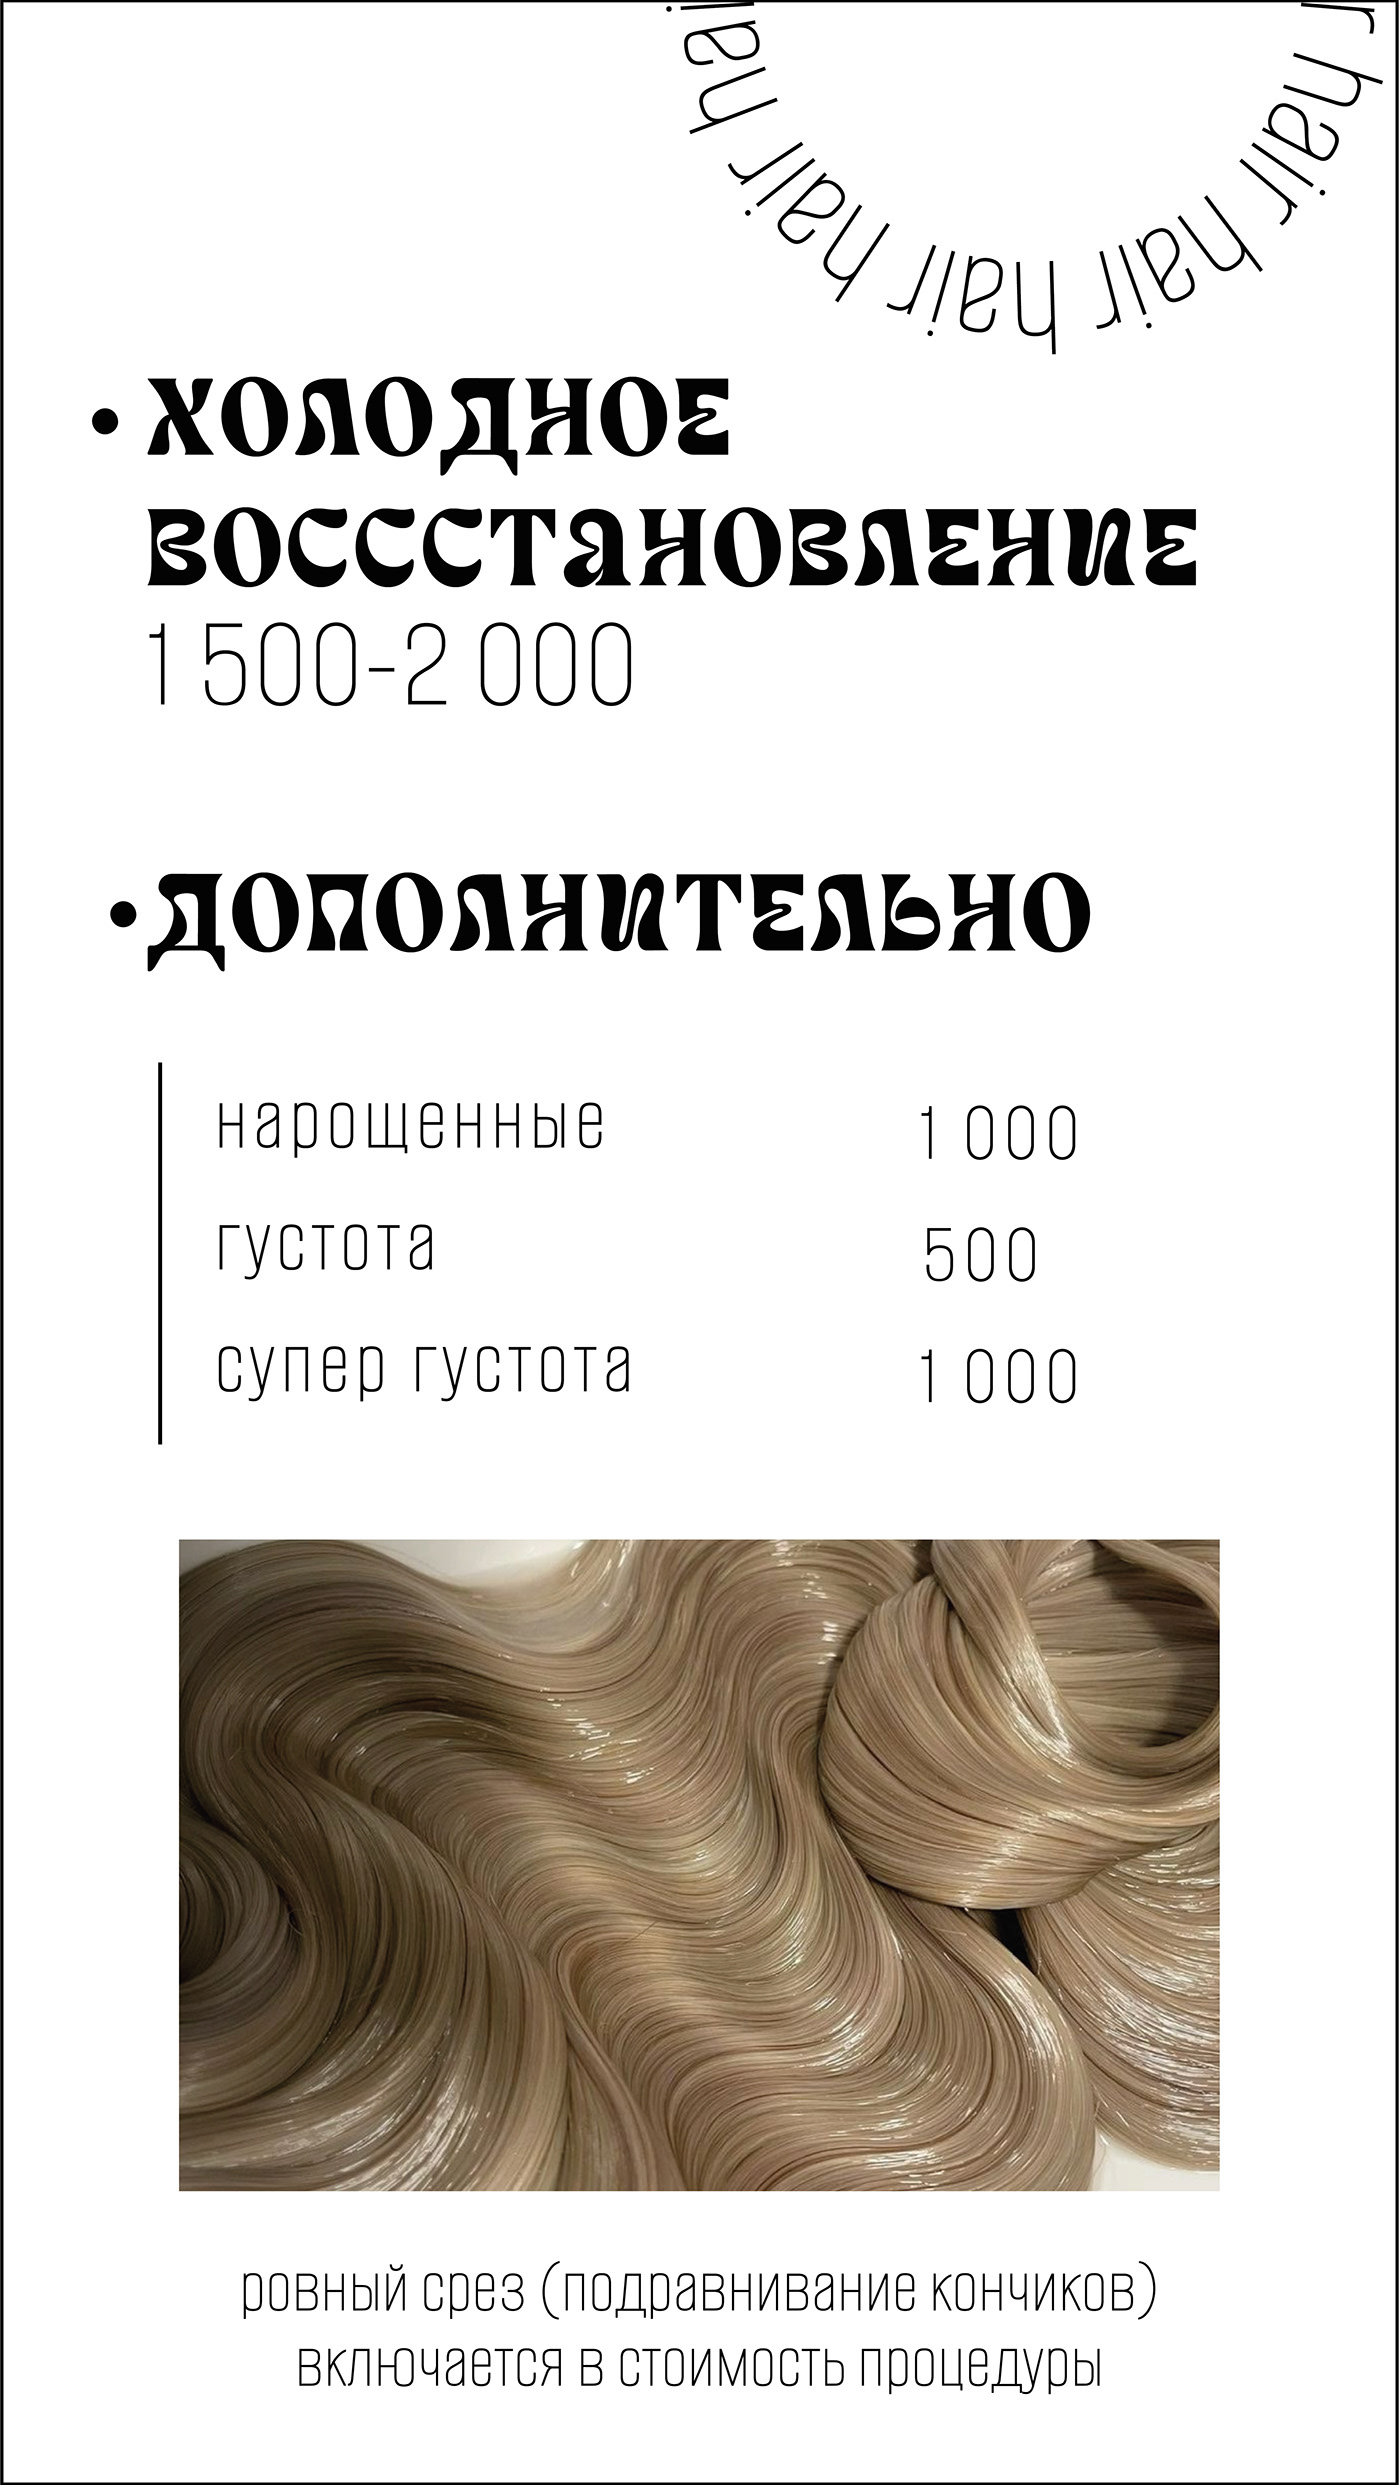 price list pricelist Dising hair волосы Прайс прайслист